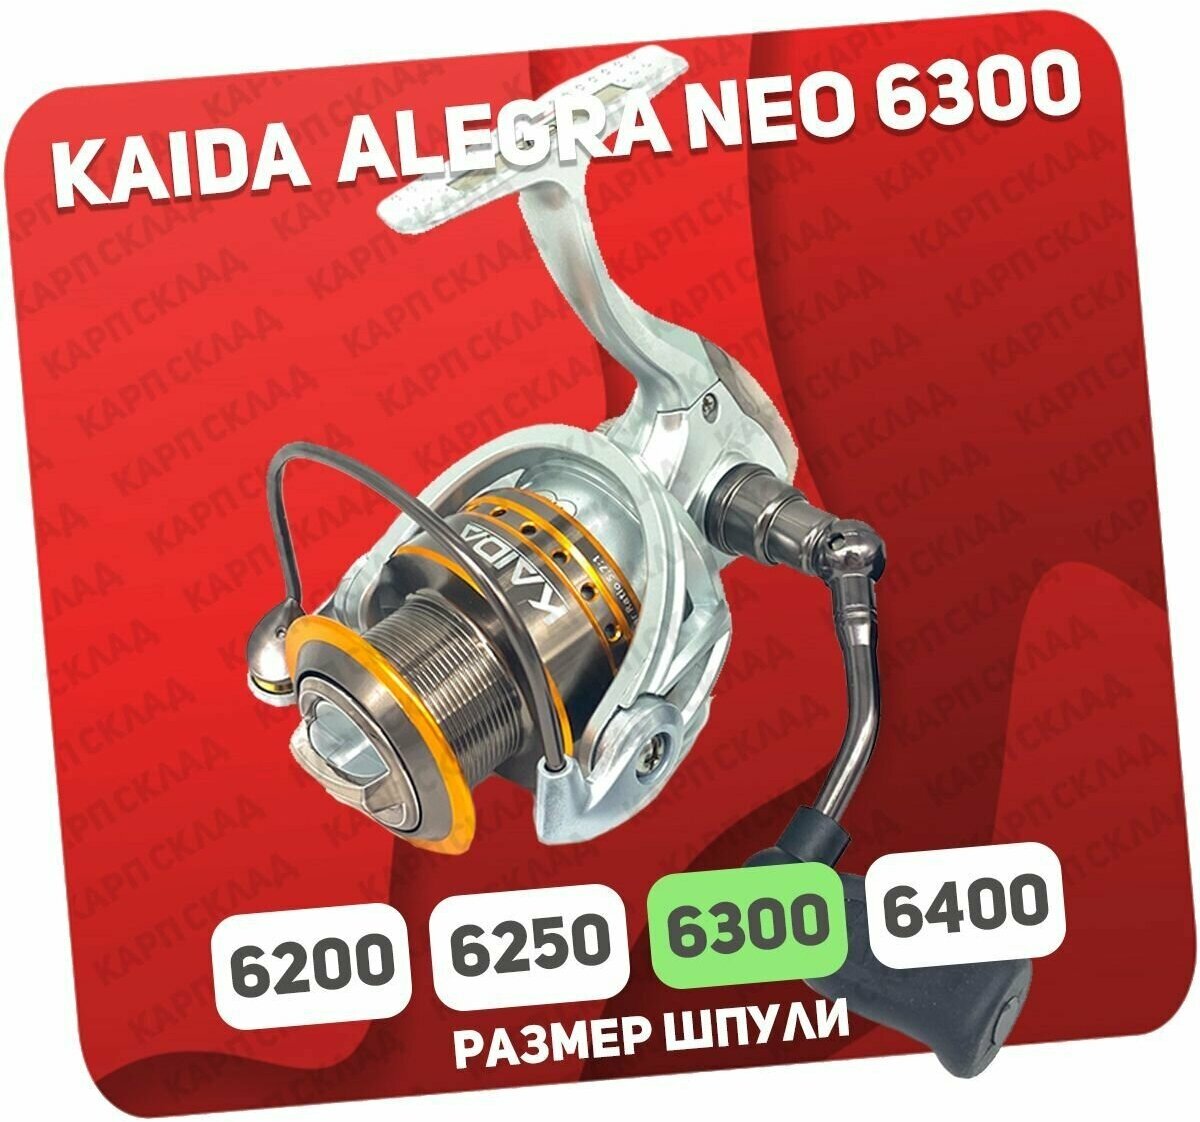 Катушка рыболовная KAIDA ALEGRA NEO 6300 безынерционная